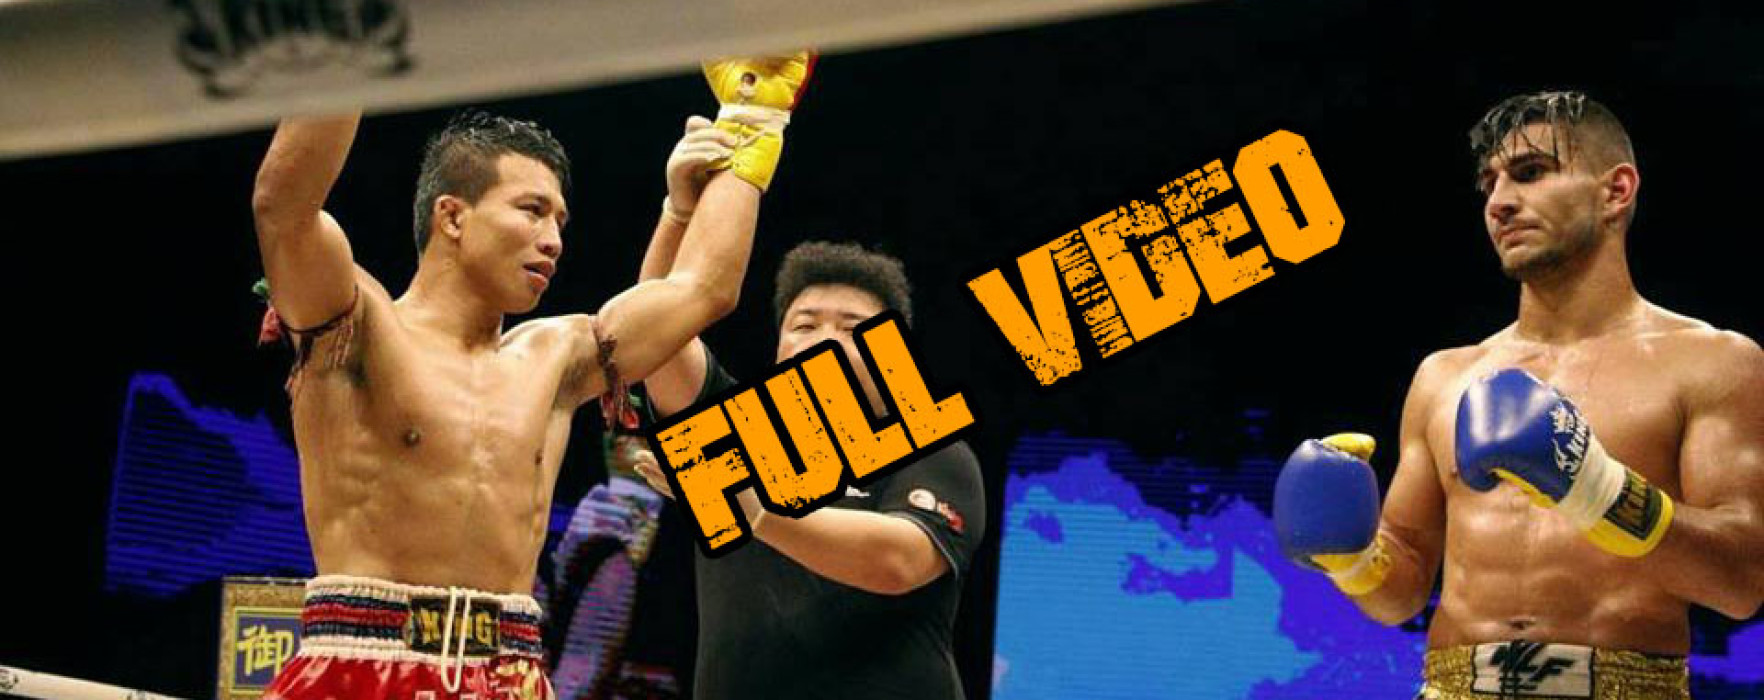 Video: Aikpracha Meenayothin vs Dylan Salvador – Kunlun Fight 11 – 05/10/2014